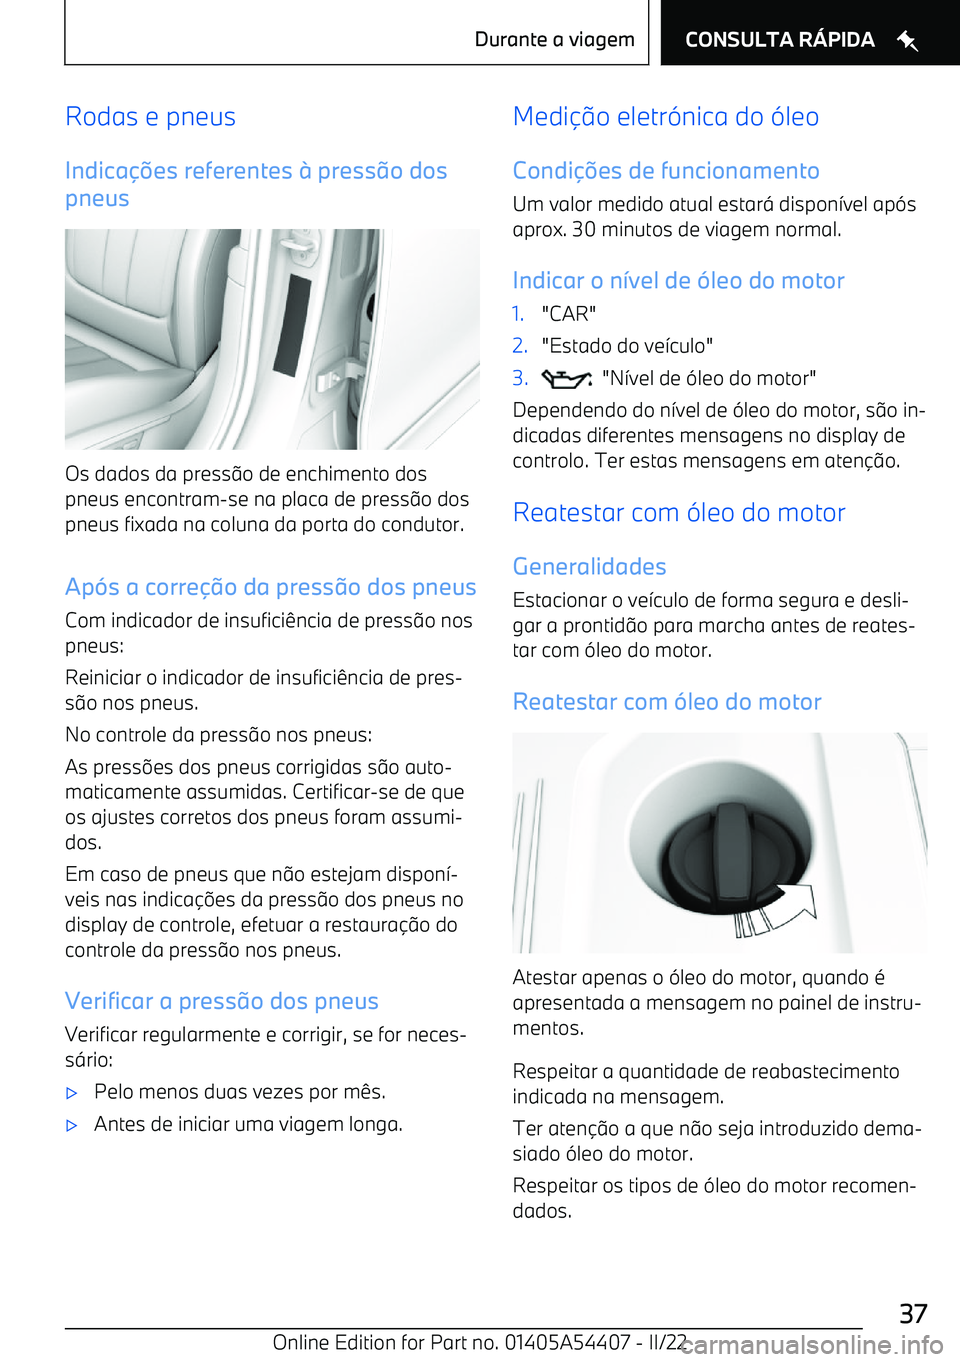 BMW X5 M 2022  Manual do condutor (in Portuguese) Rodas e pneus
Indica